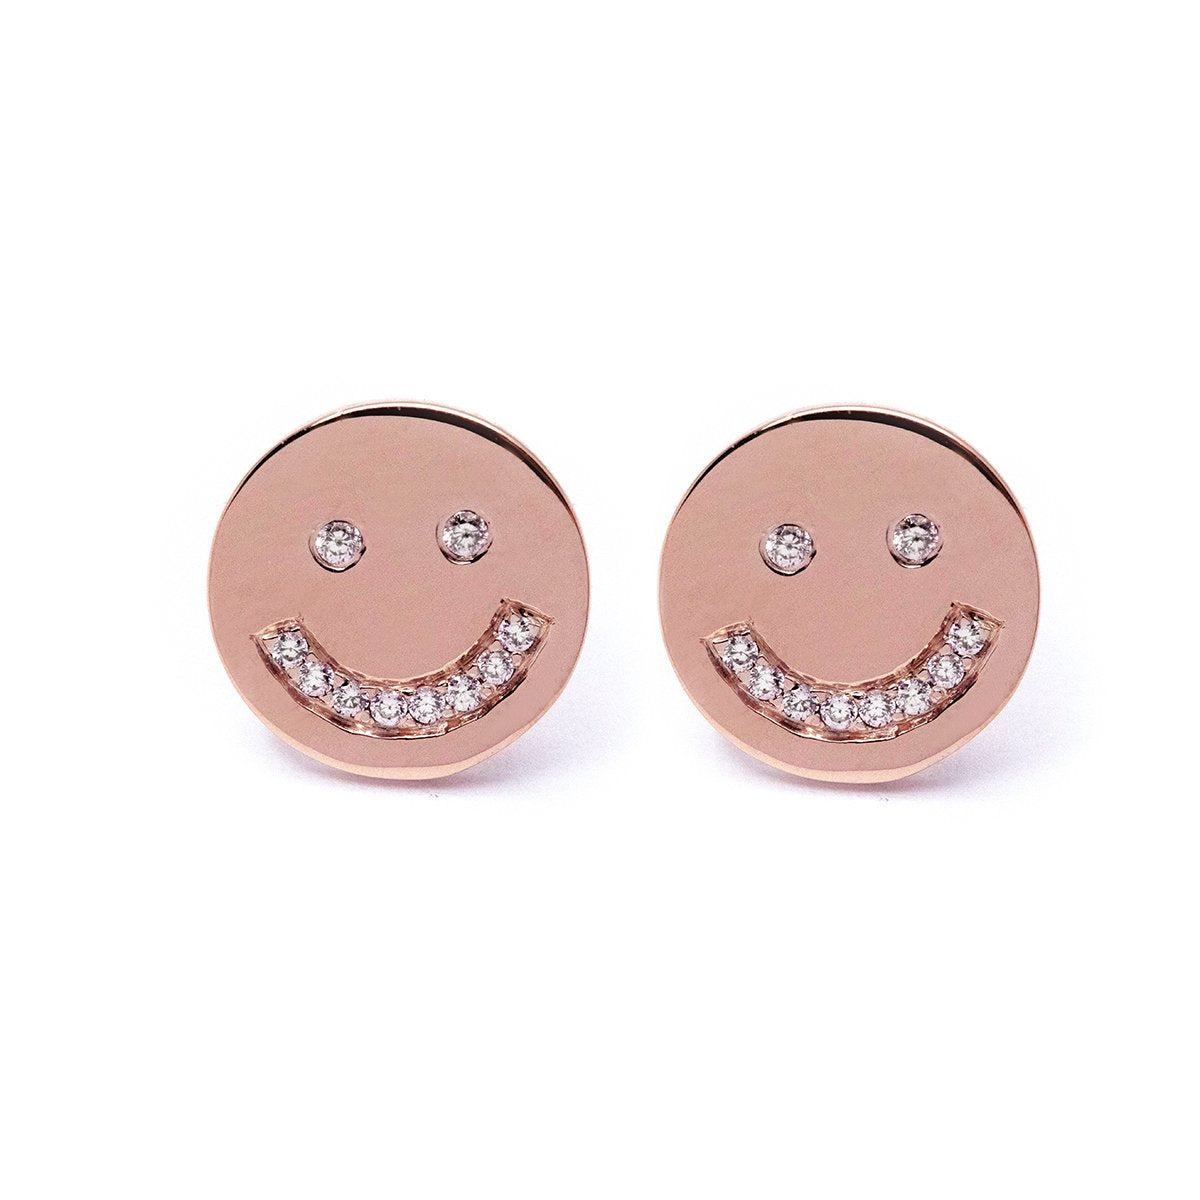 Smiling Face Earrings (Rose Gold) - Chainless Brain